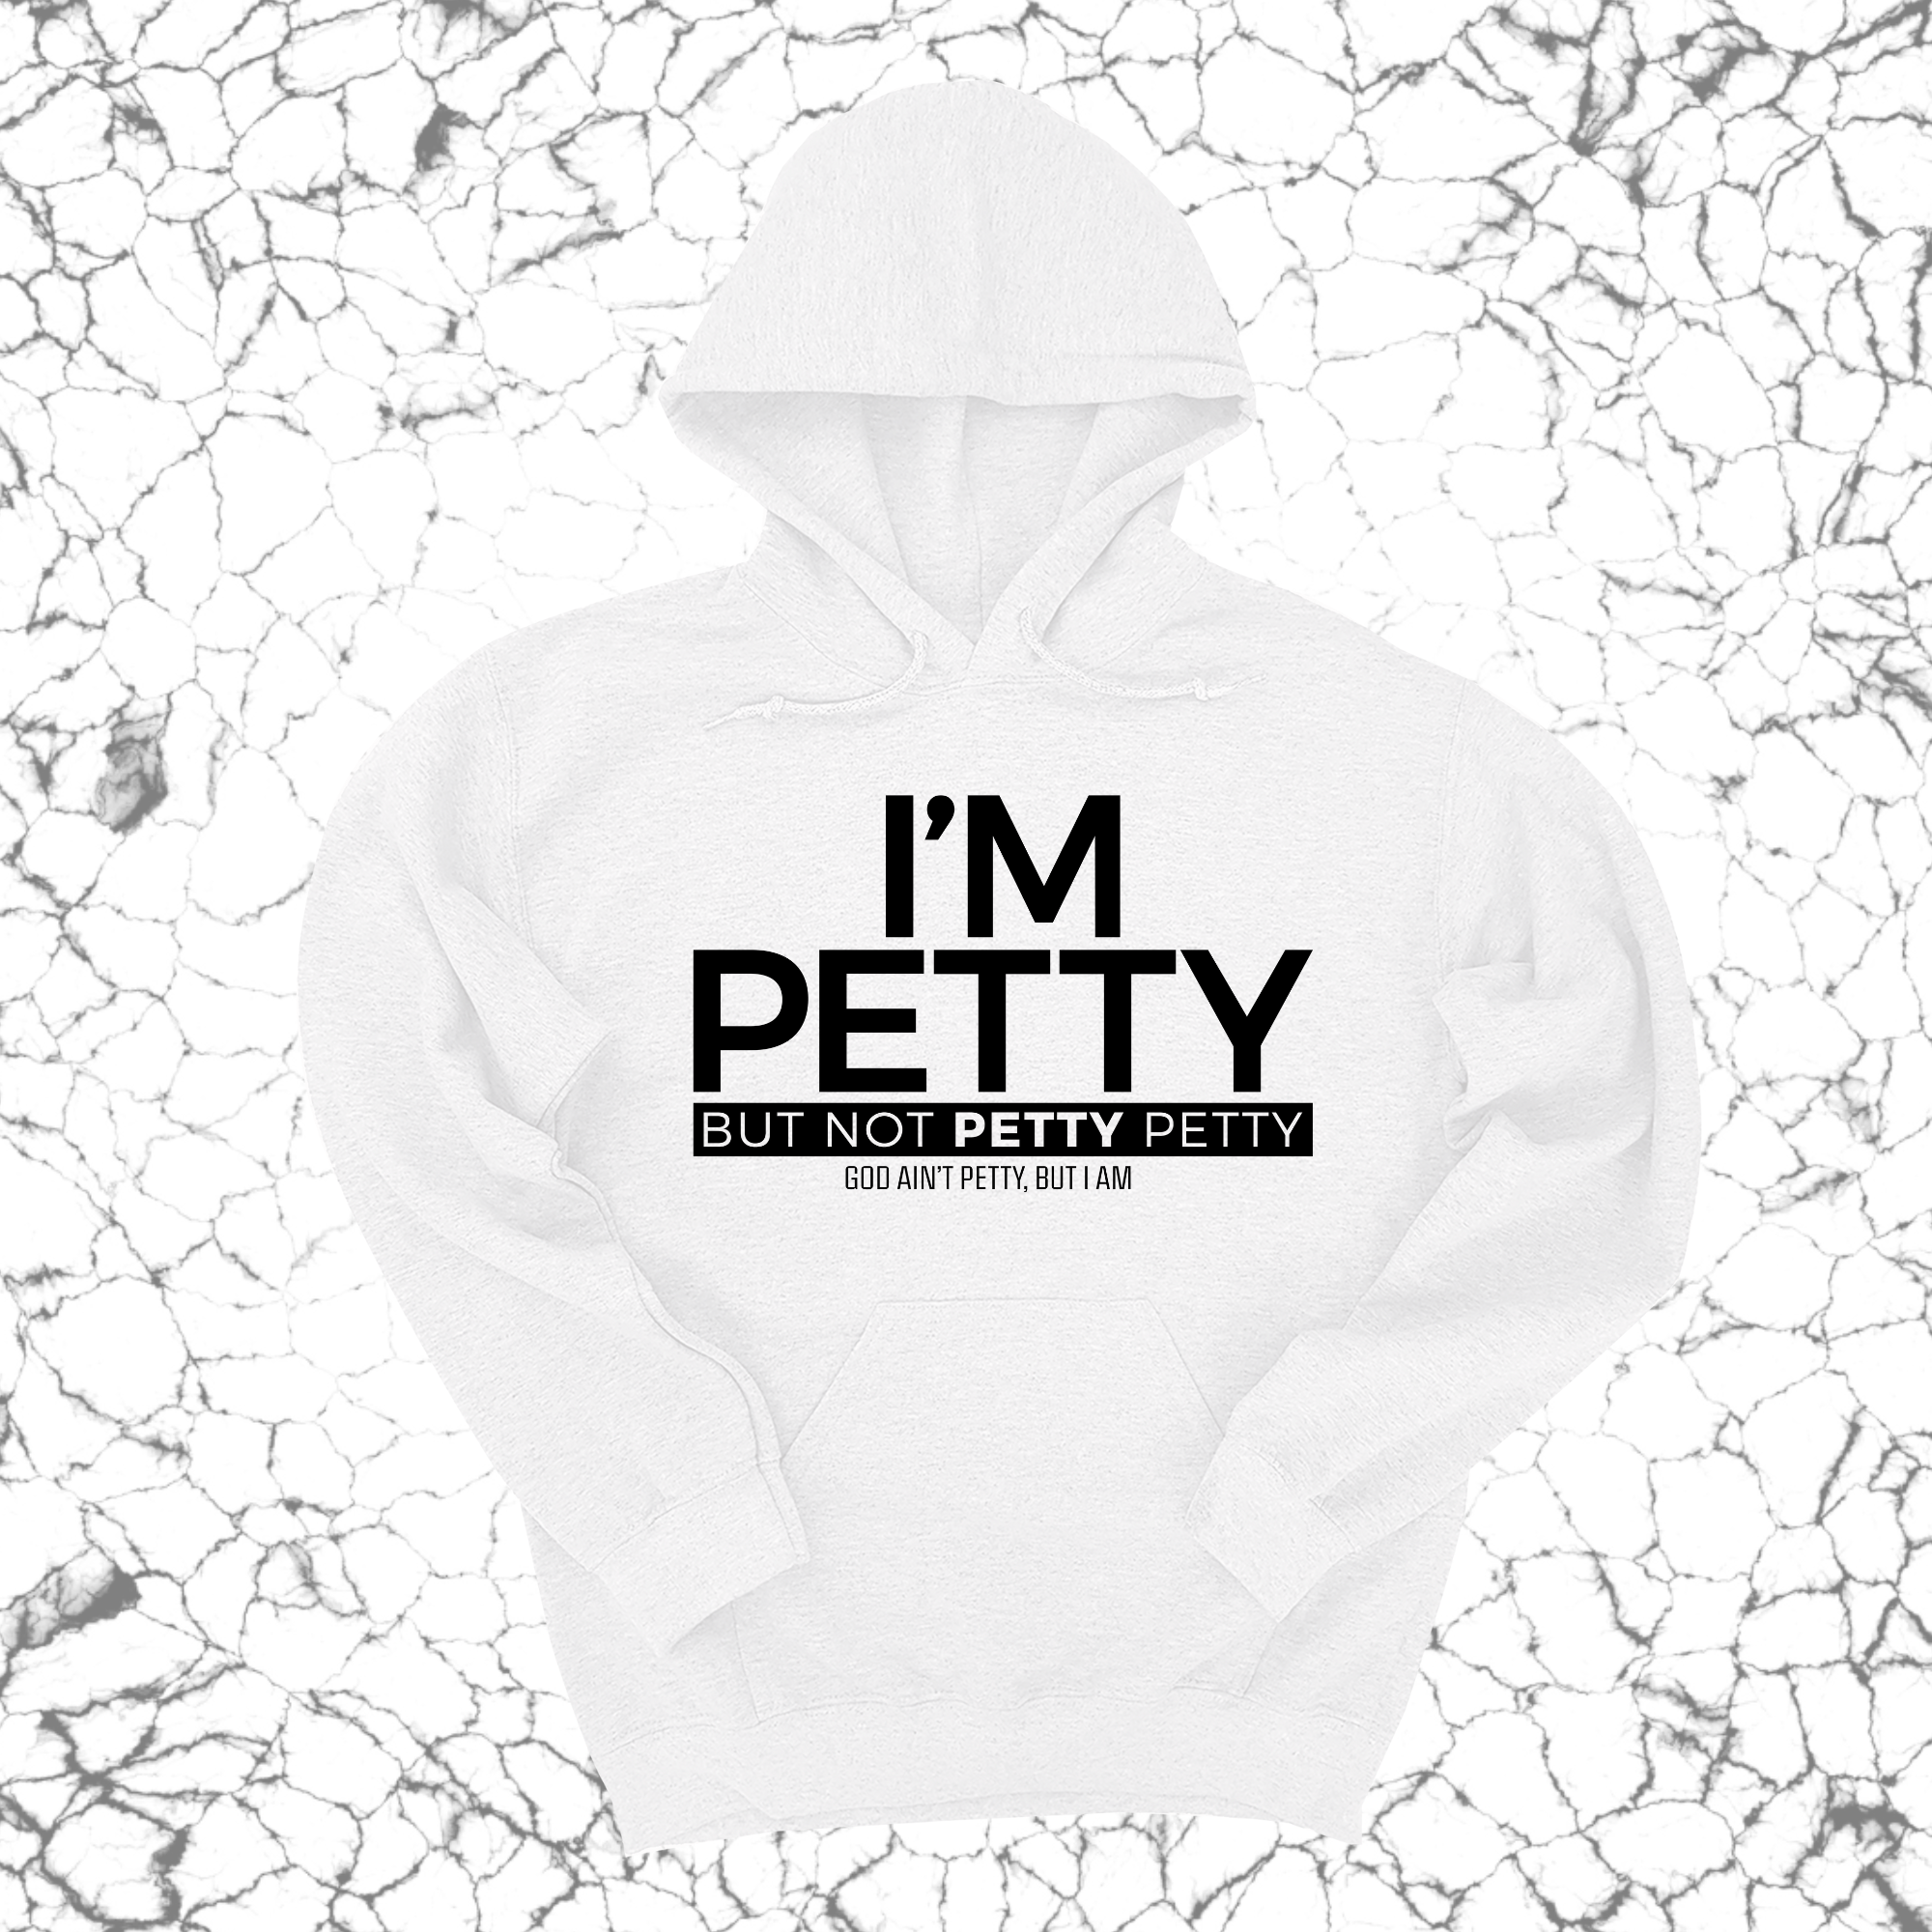 I'm Petty but not petty petty Unisex Hoodie-Hoodie-The Original God Ain't Petty But I Am